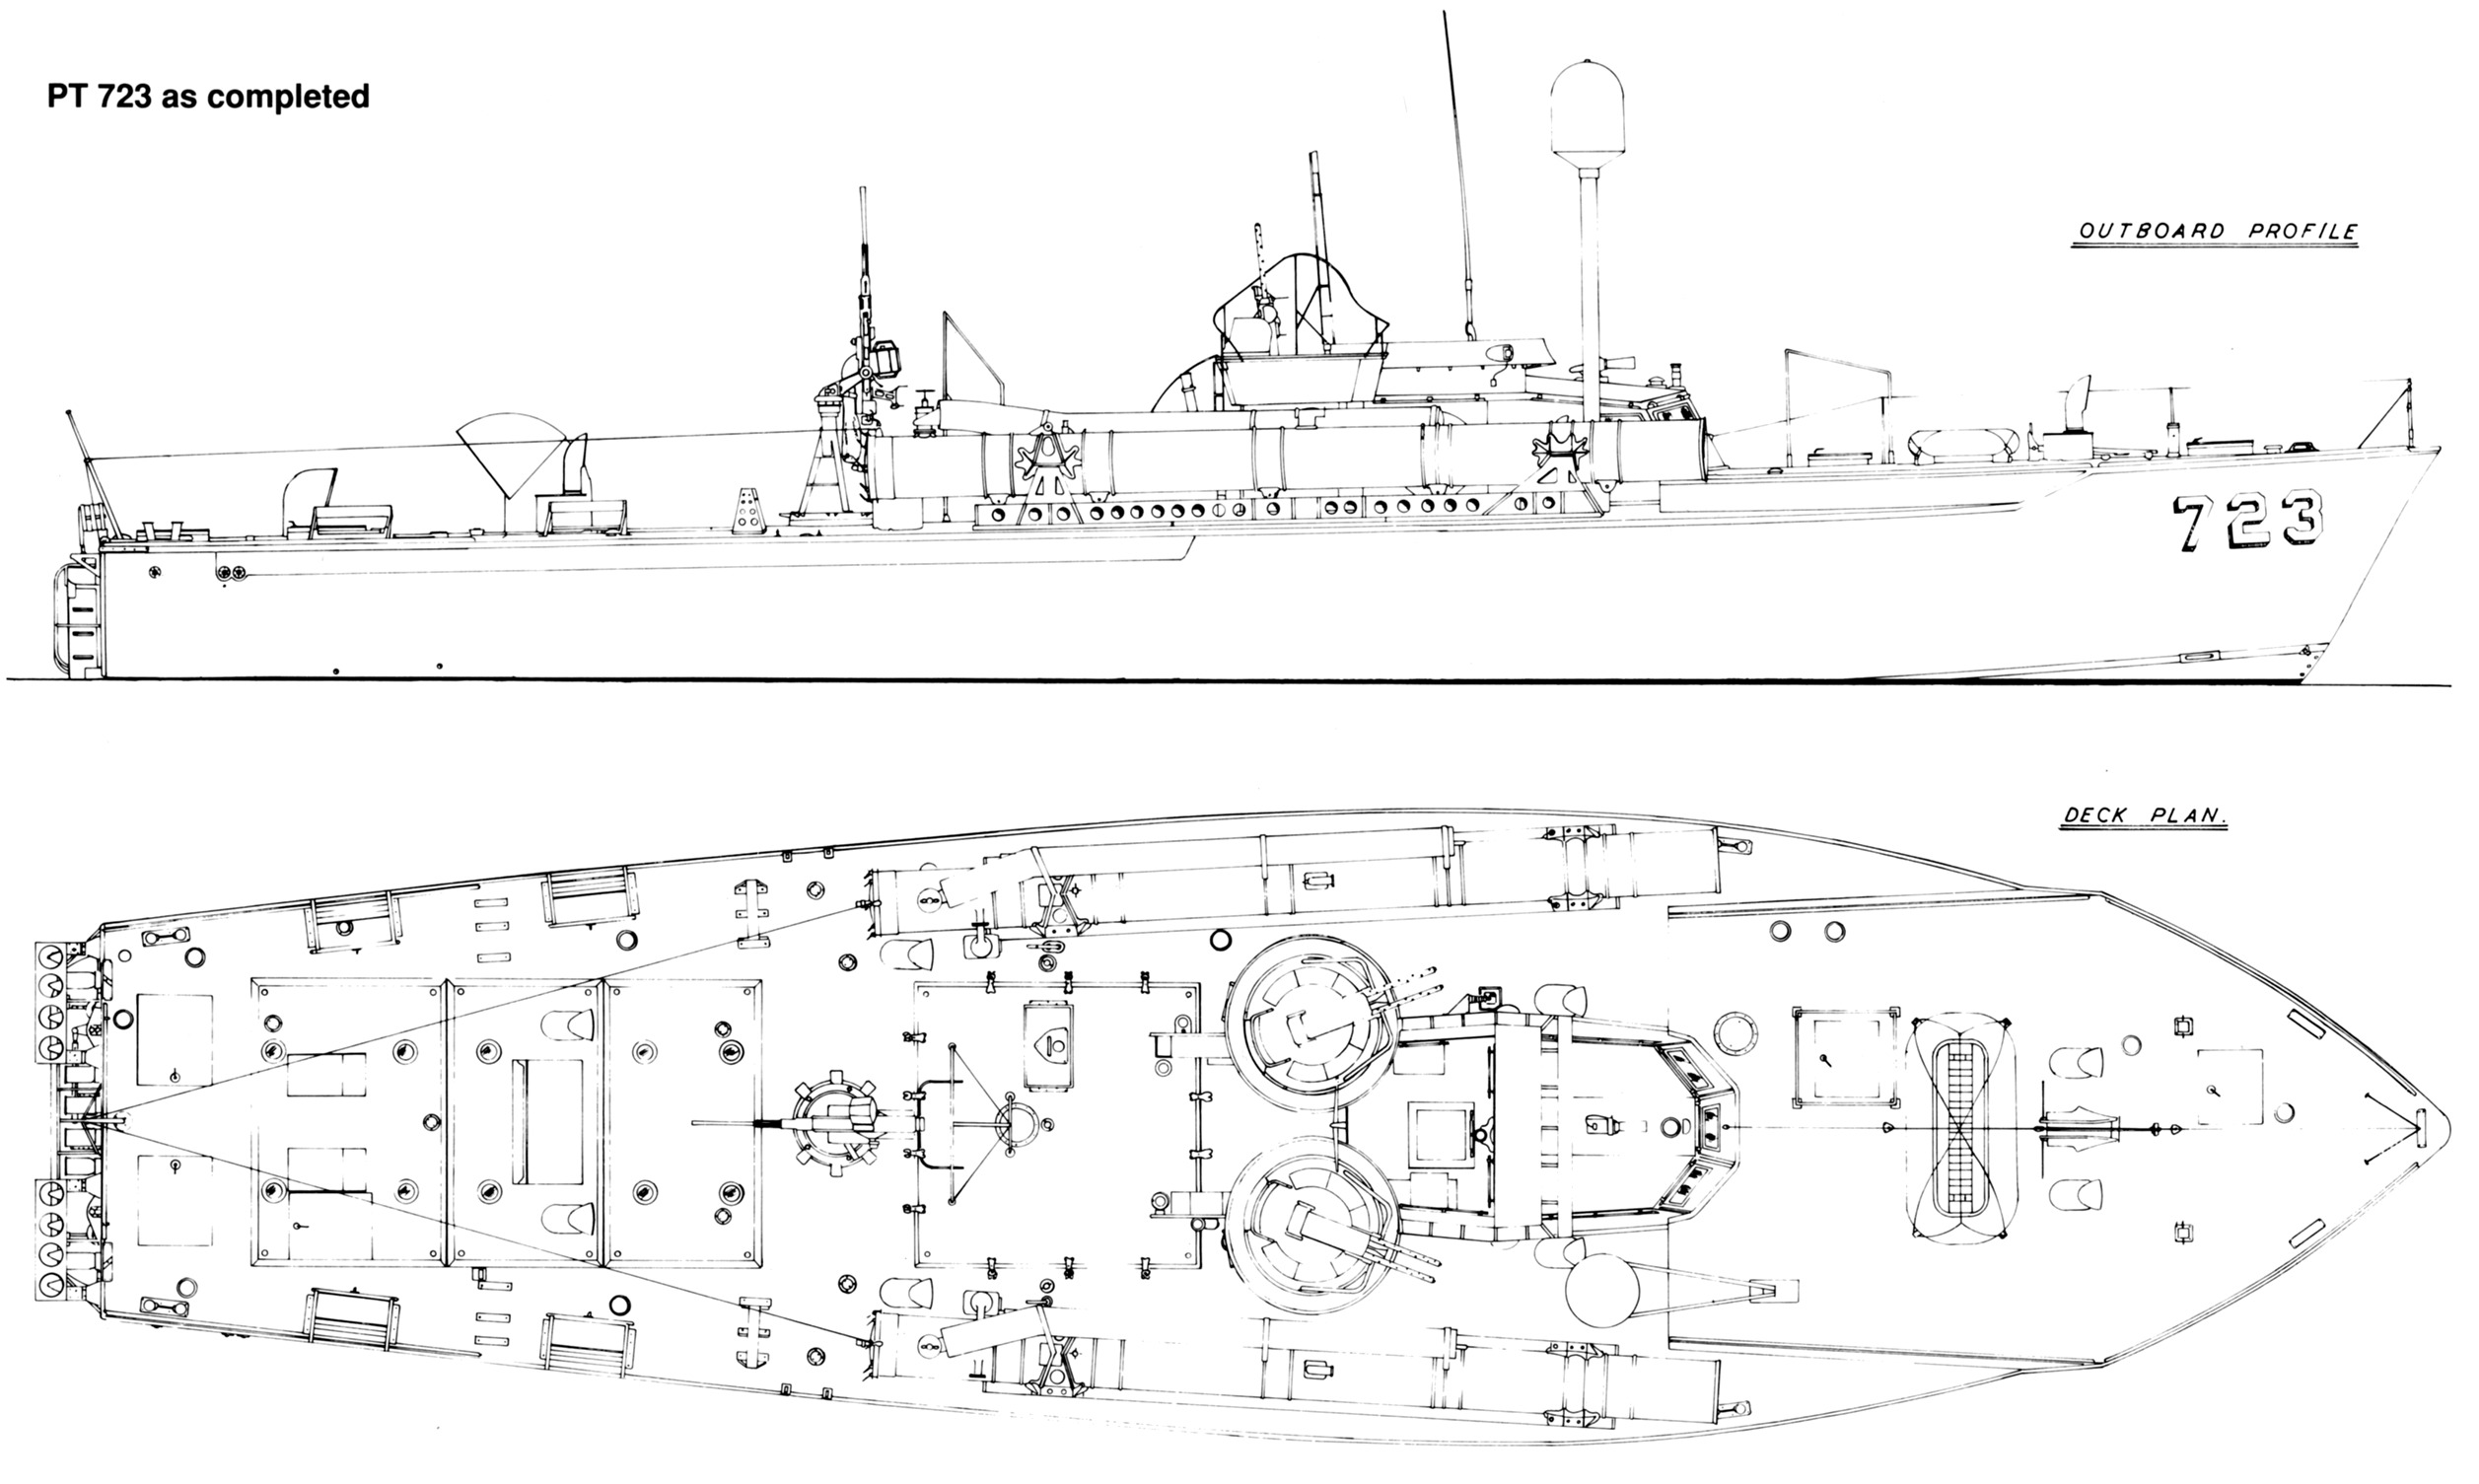 d34 PT-723 outboard profile.JPG